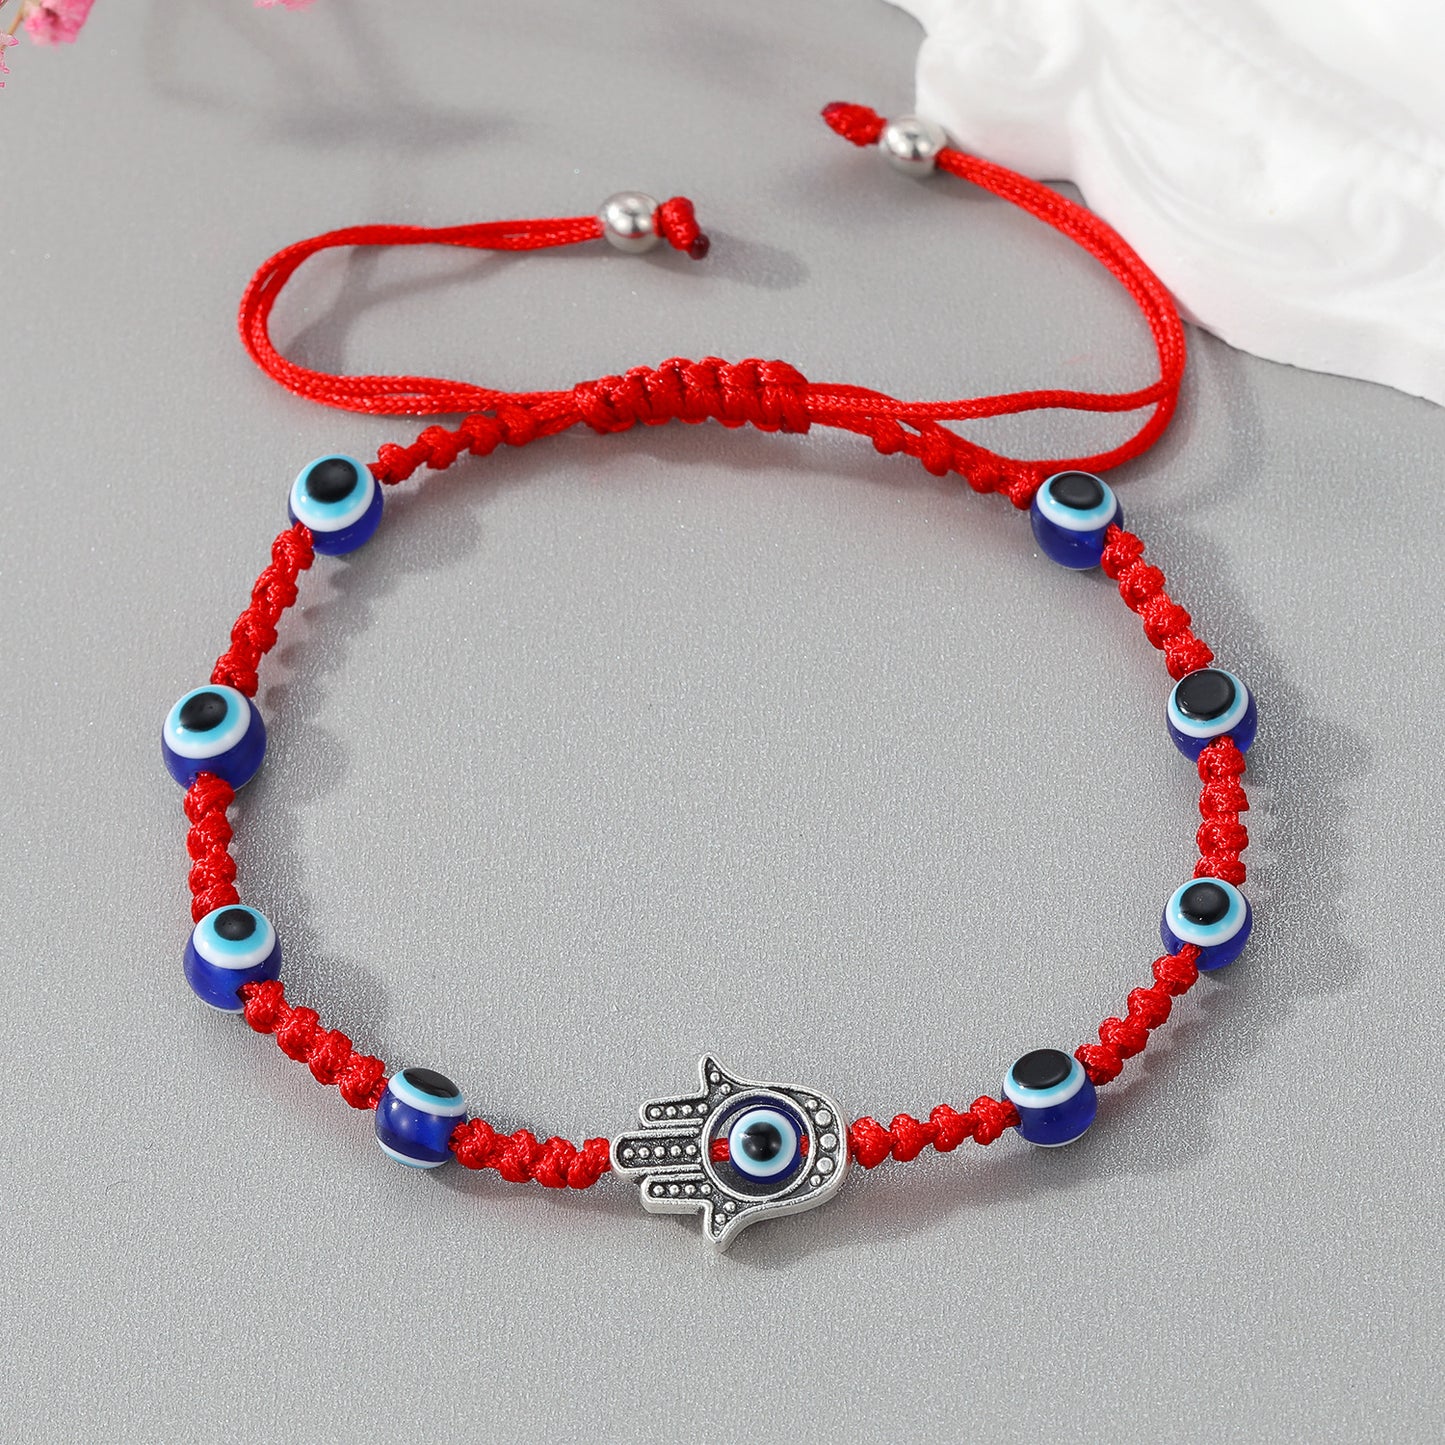 New Vintage Style Palm Blue Eyes Pendant Round Beads Adjustable Bracelet